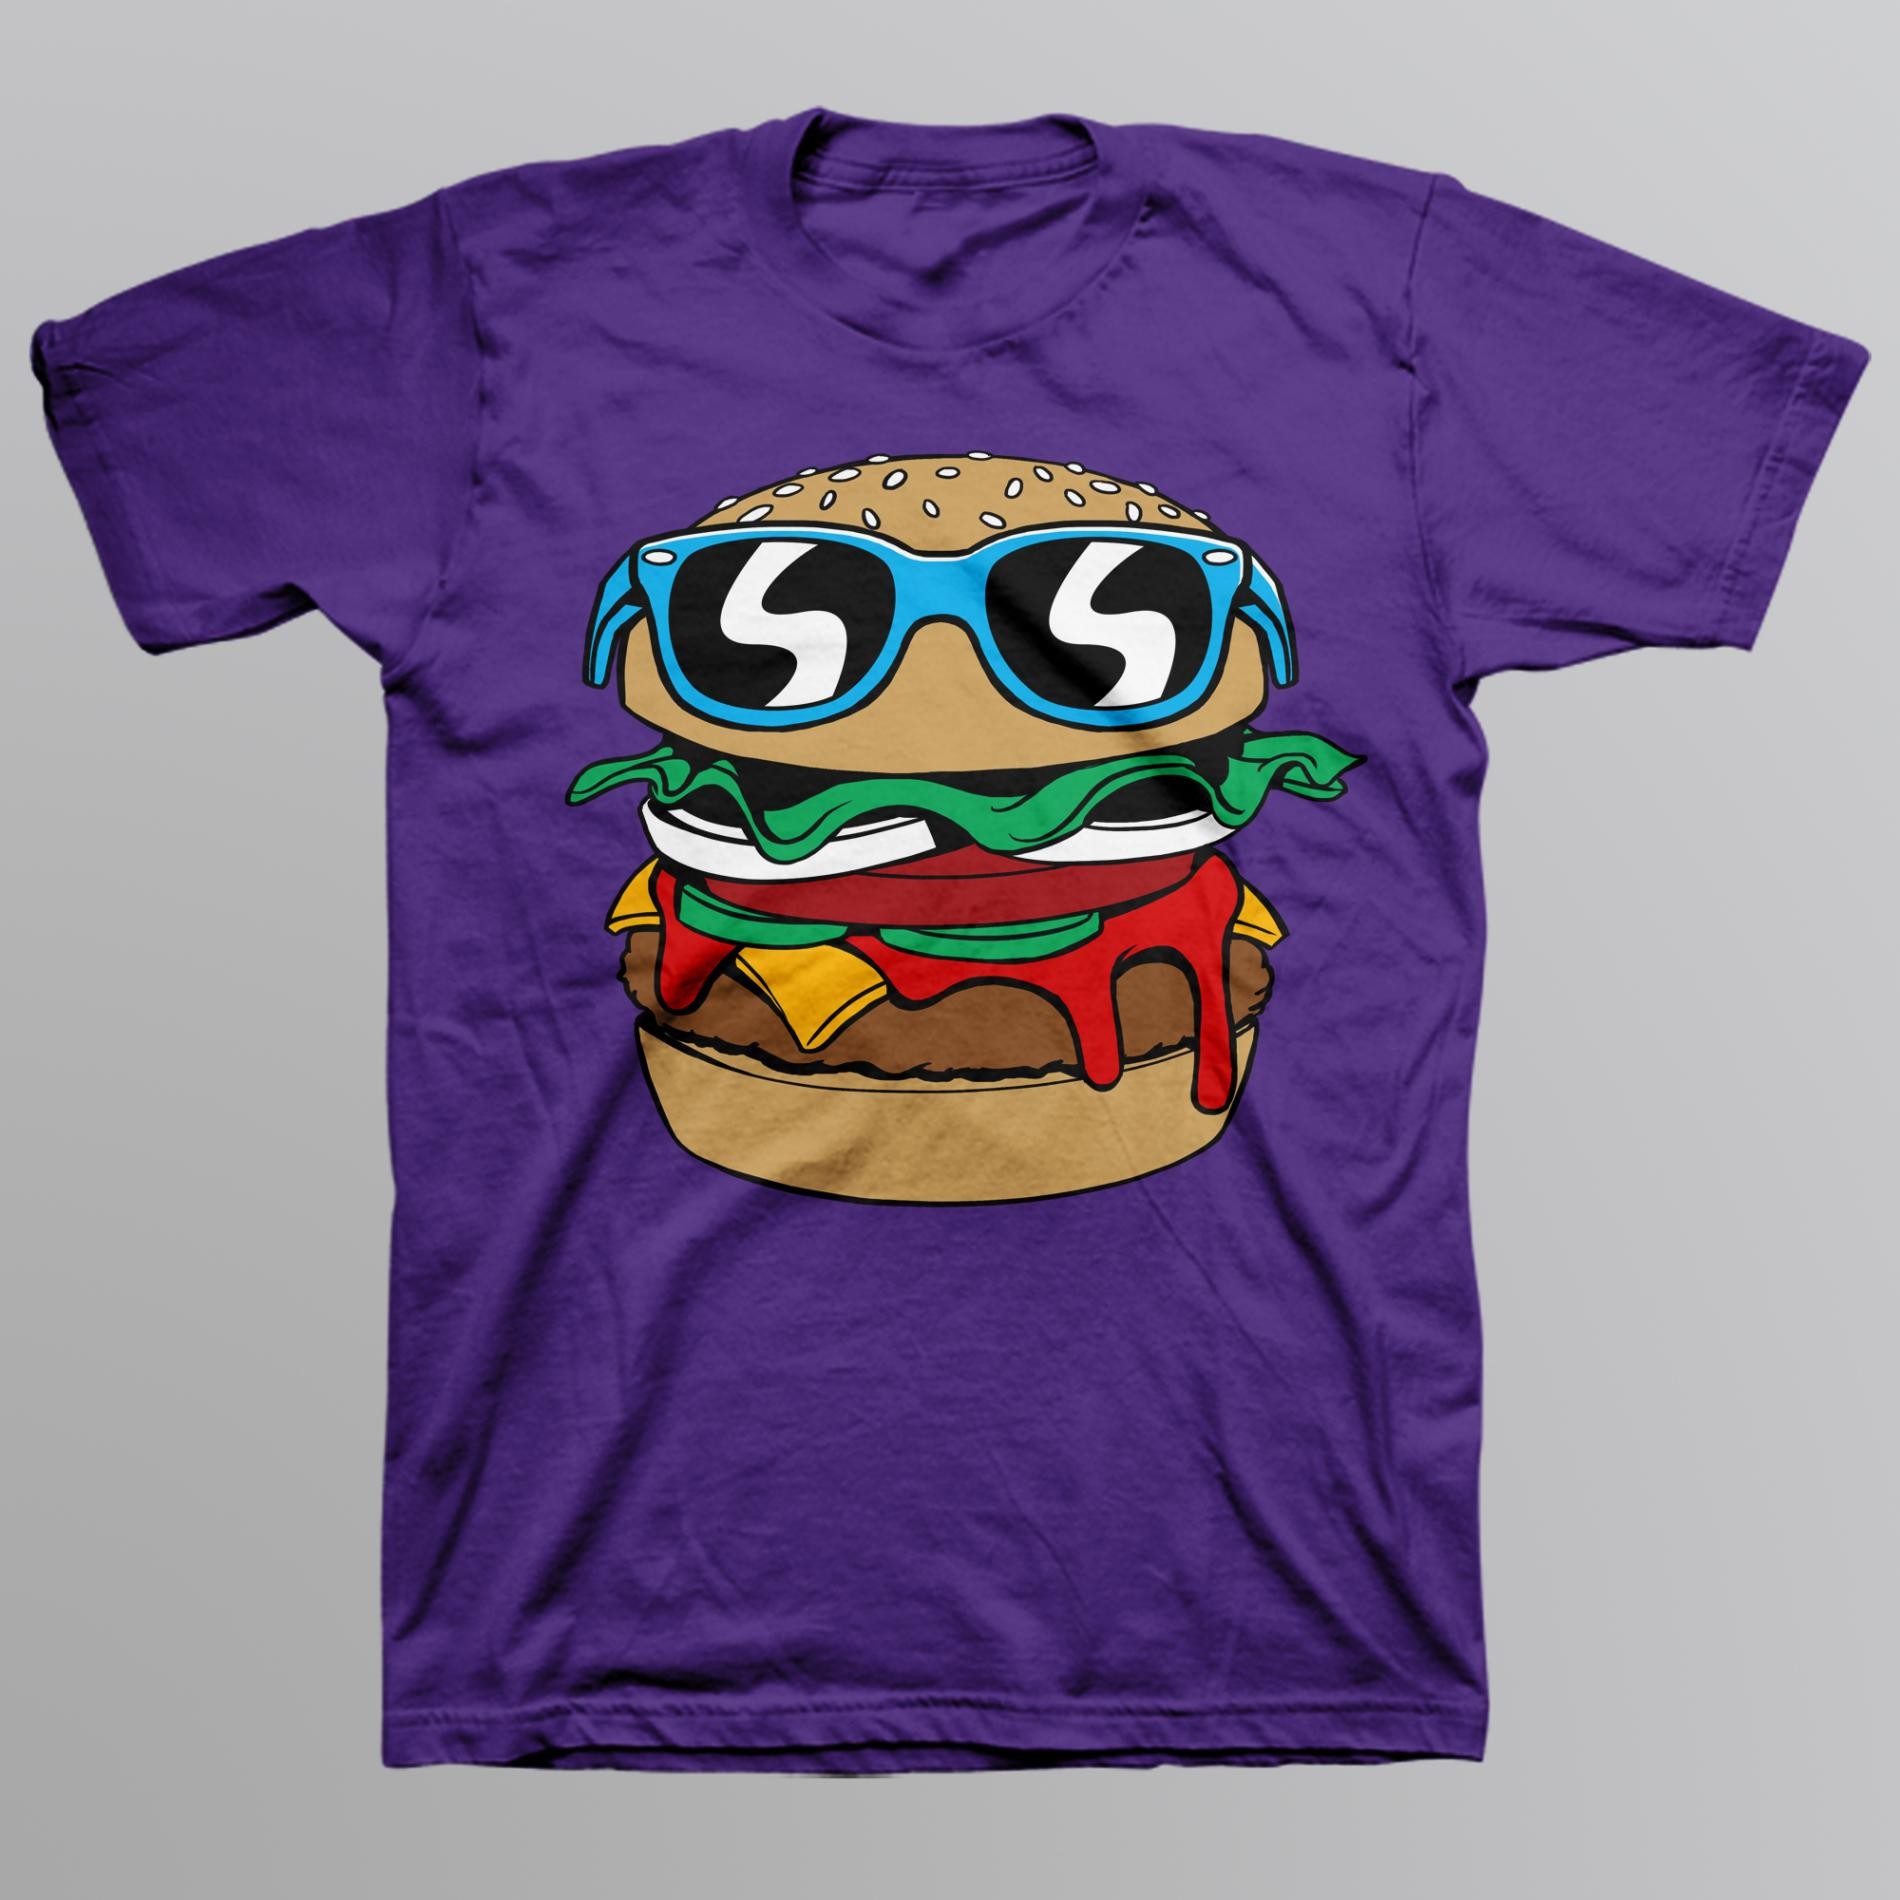 Route 66 Boy's Graphic T-Shirt - Cool Burger